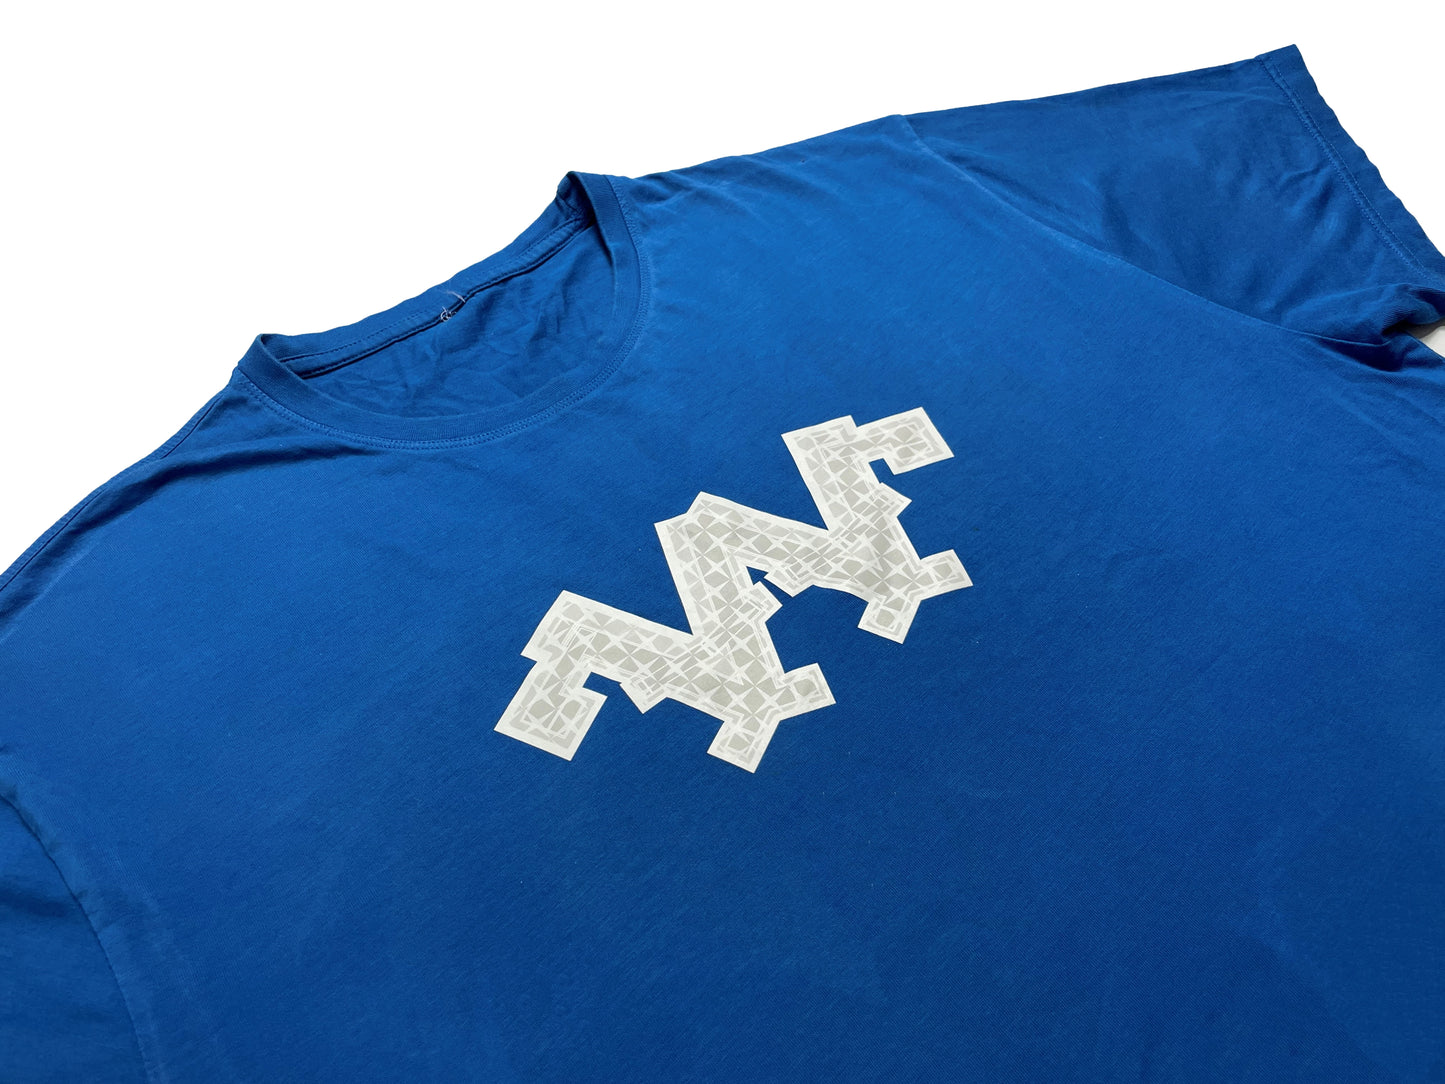 Blue Graphic Tee Shirt